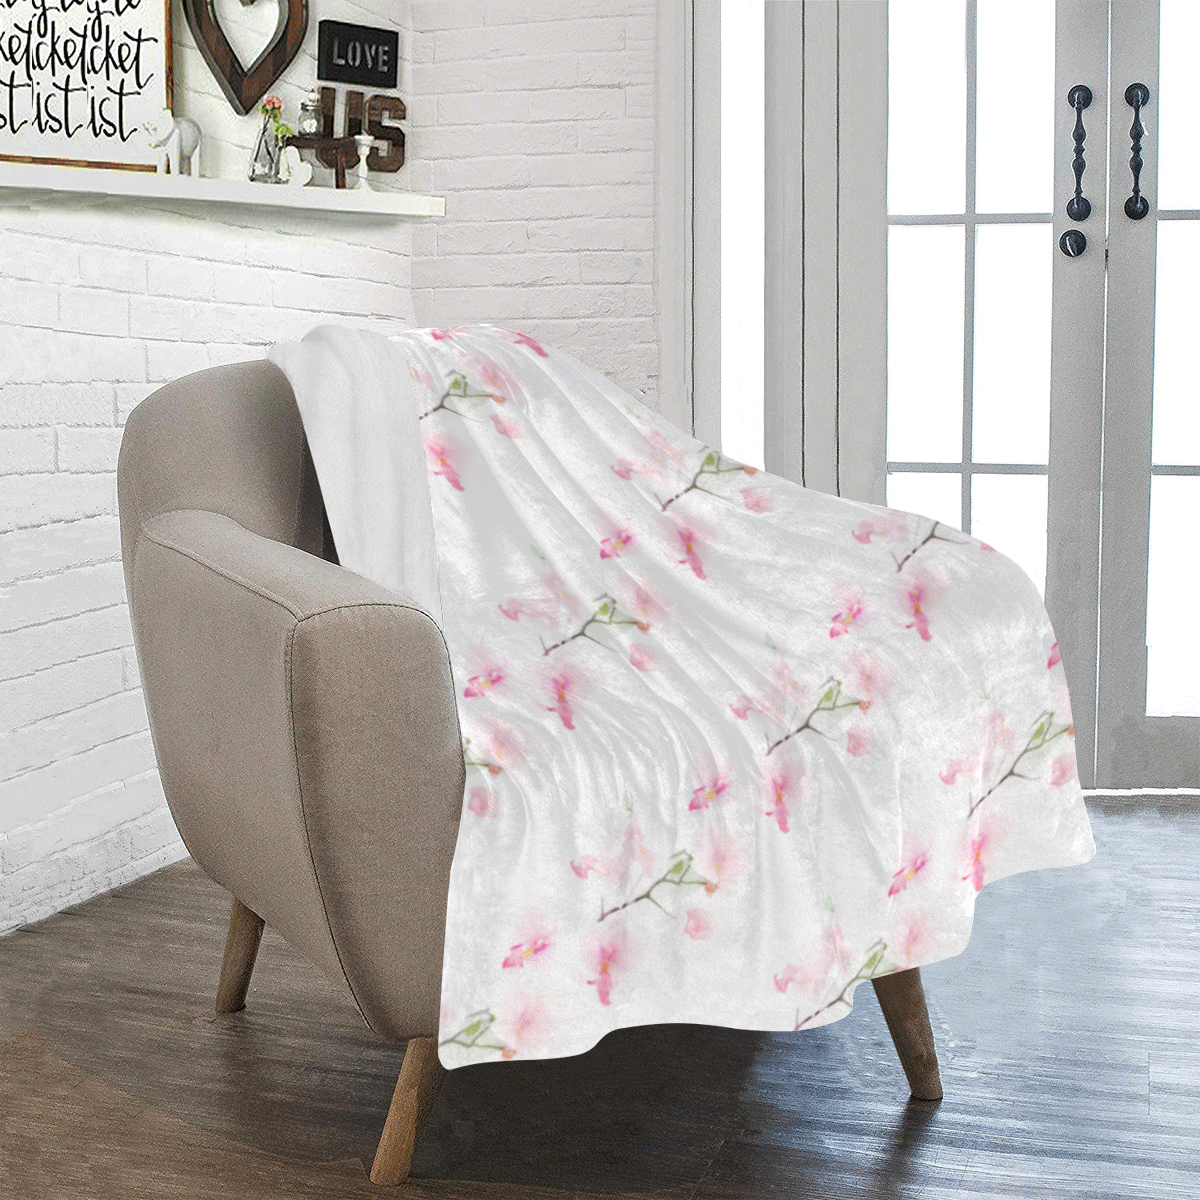 Pattern Orchidées Ultra-Soft Micro Fleece Blanket 30''x40''